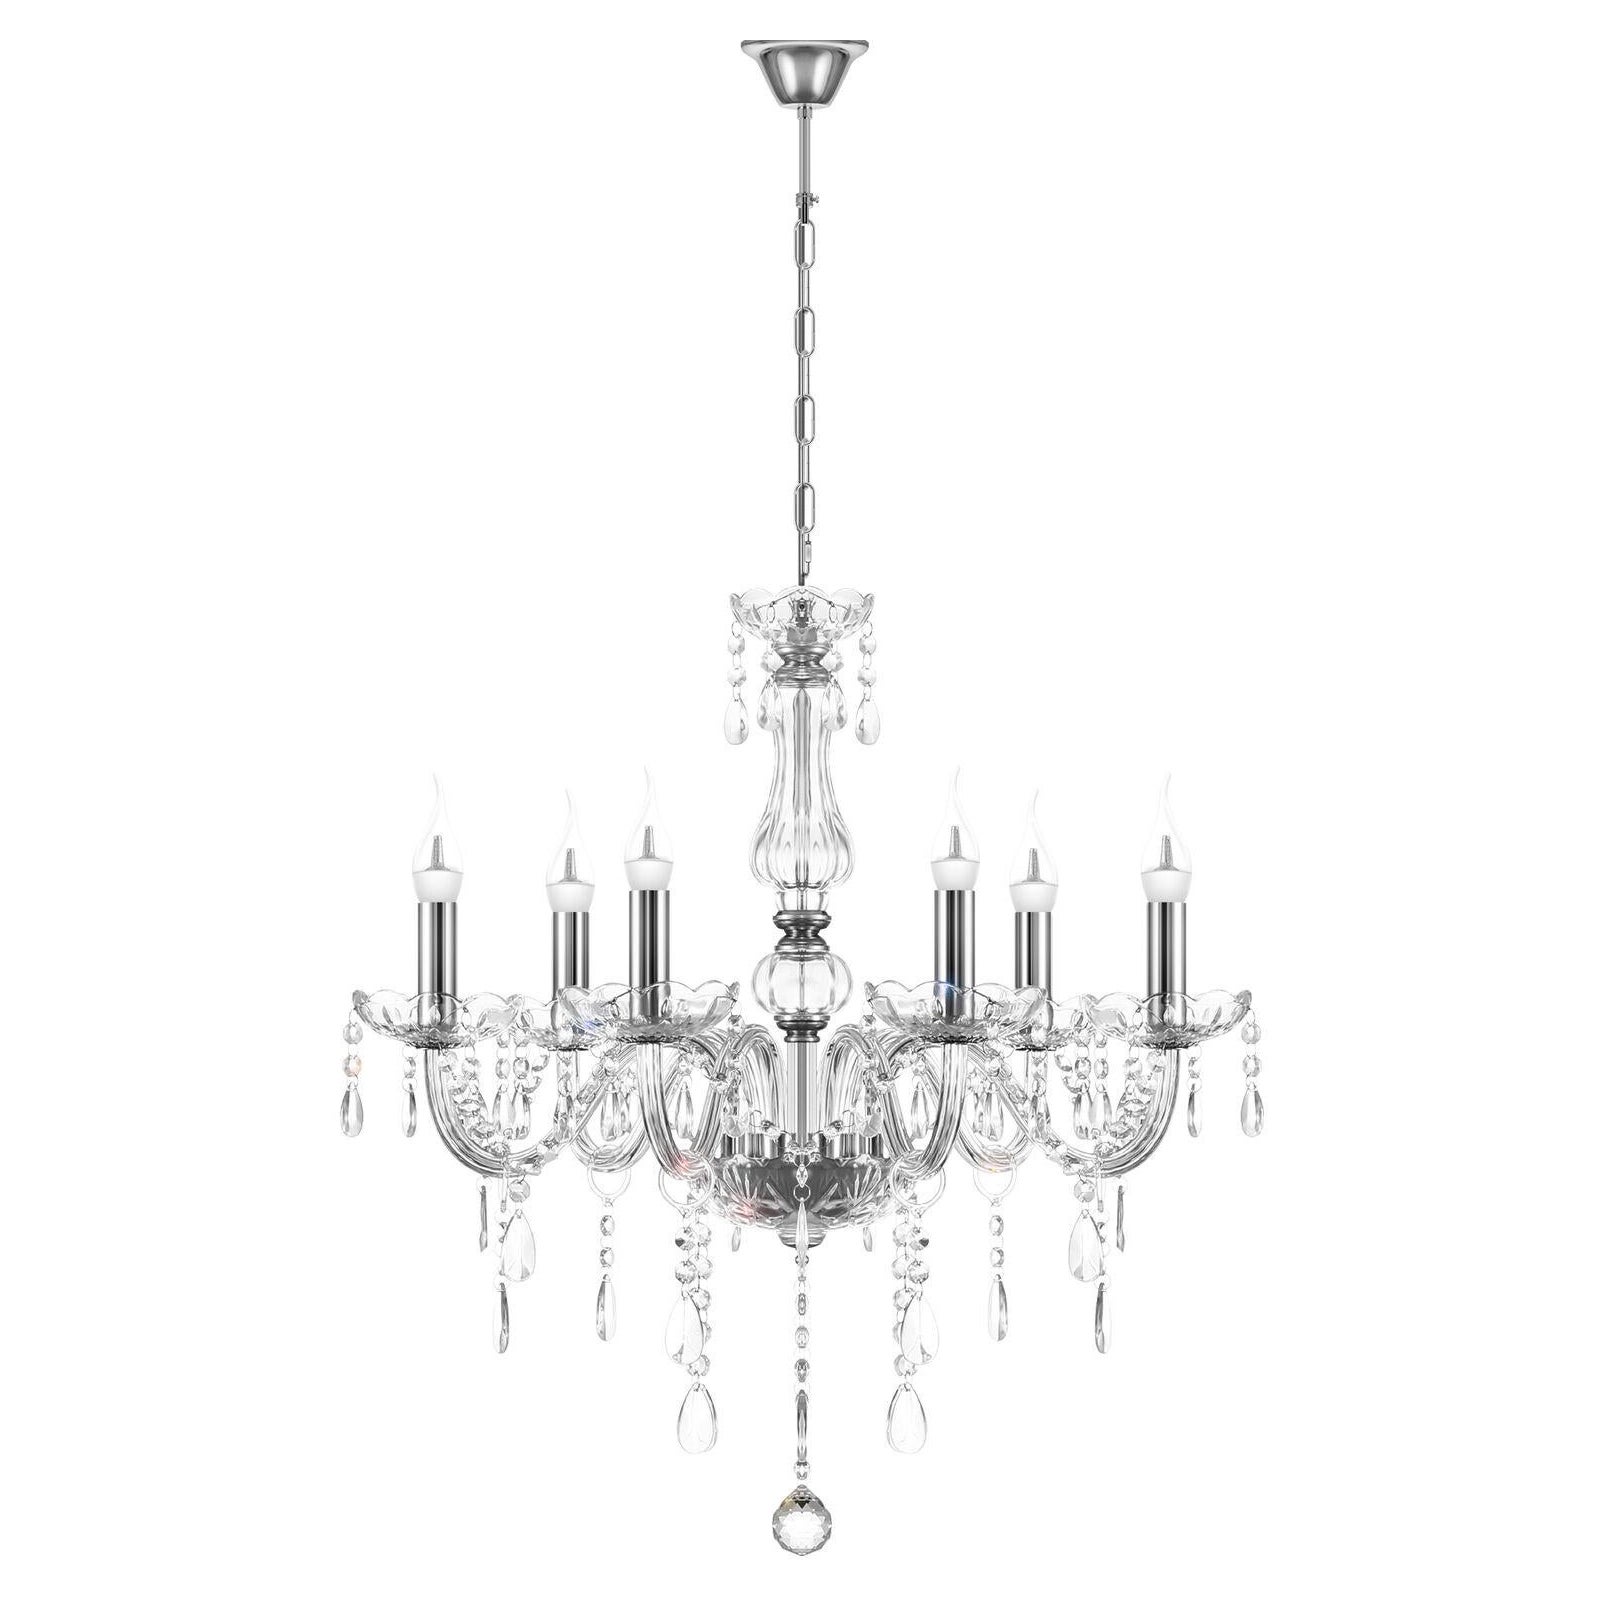 Decorative Crystal CEILING LAMP Pendant Venetian Hollywood Regency Chandelier